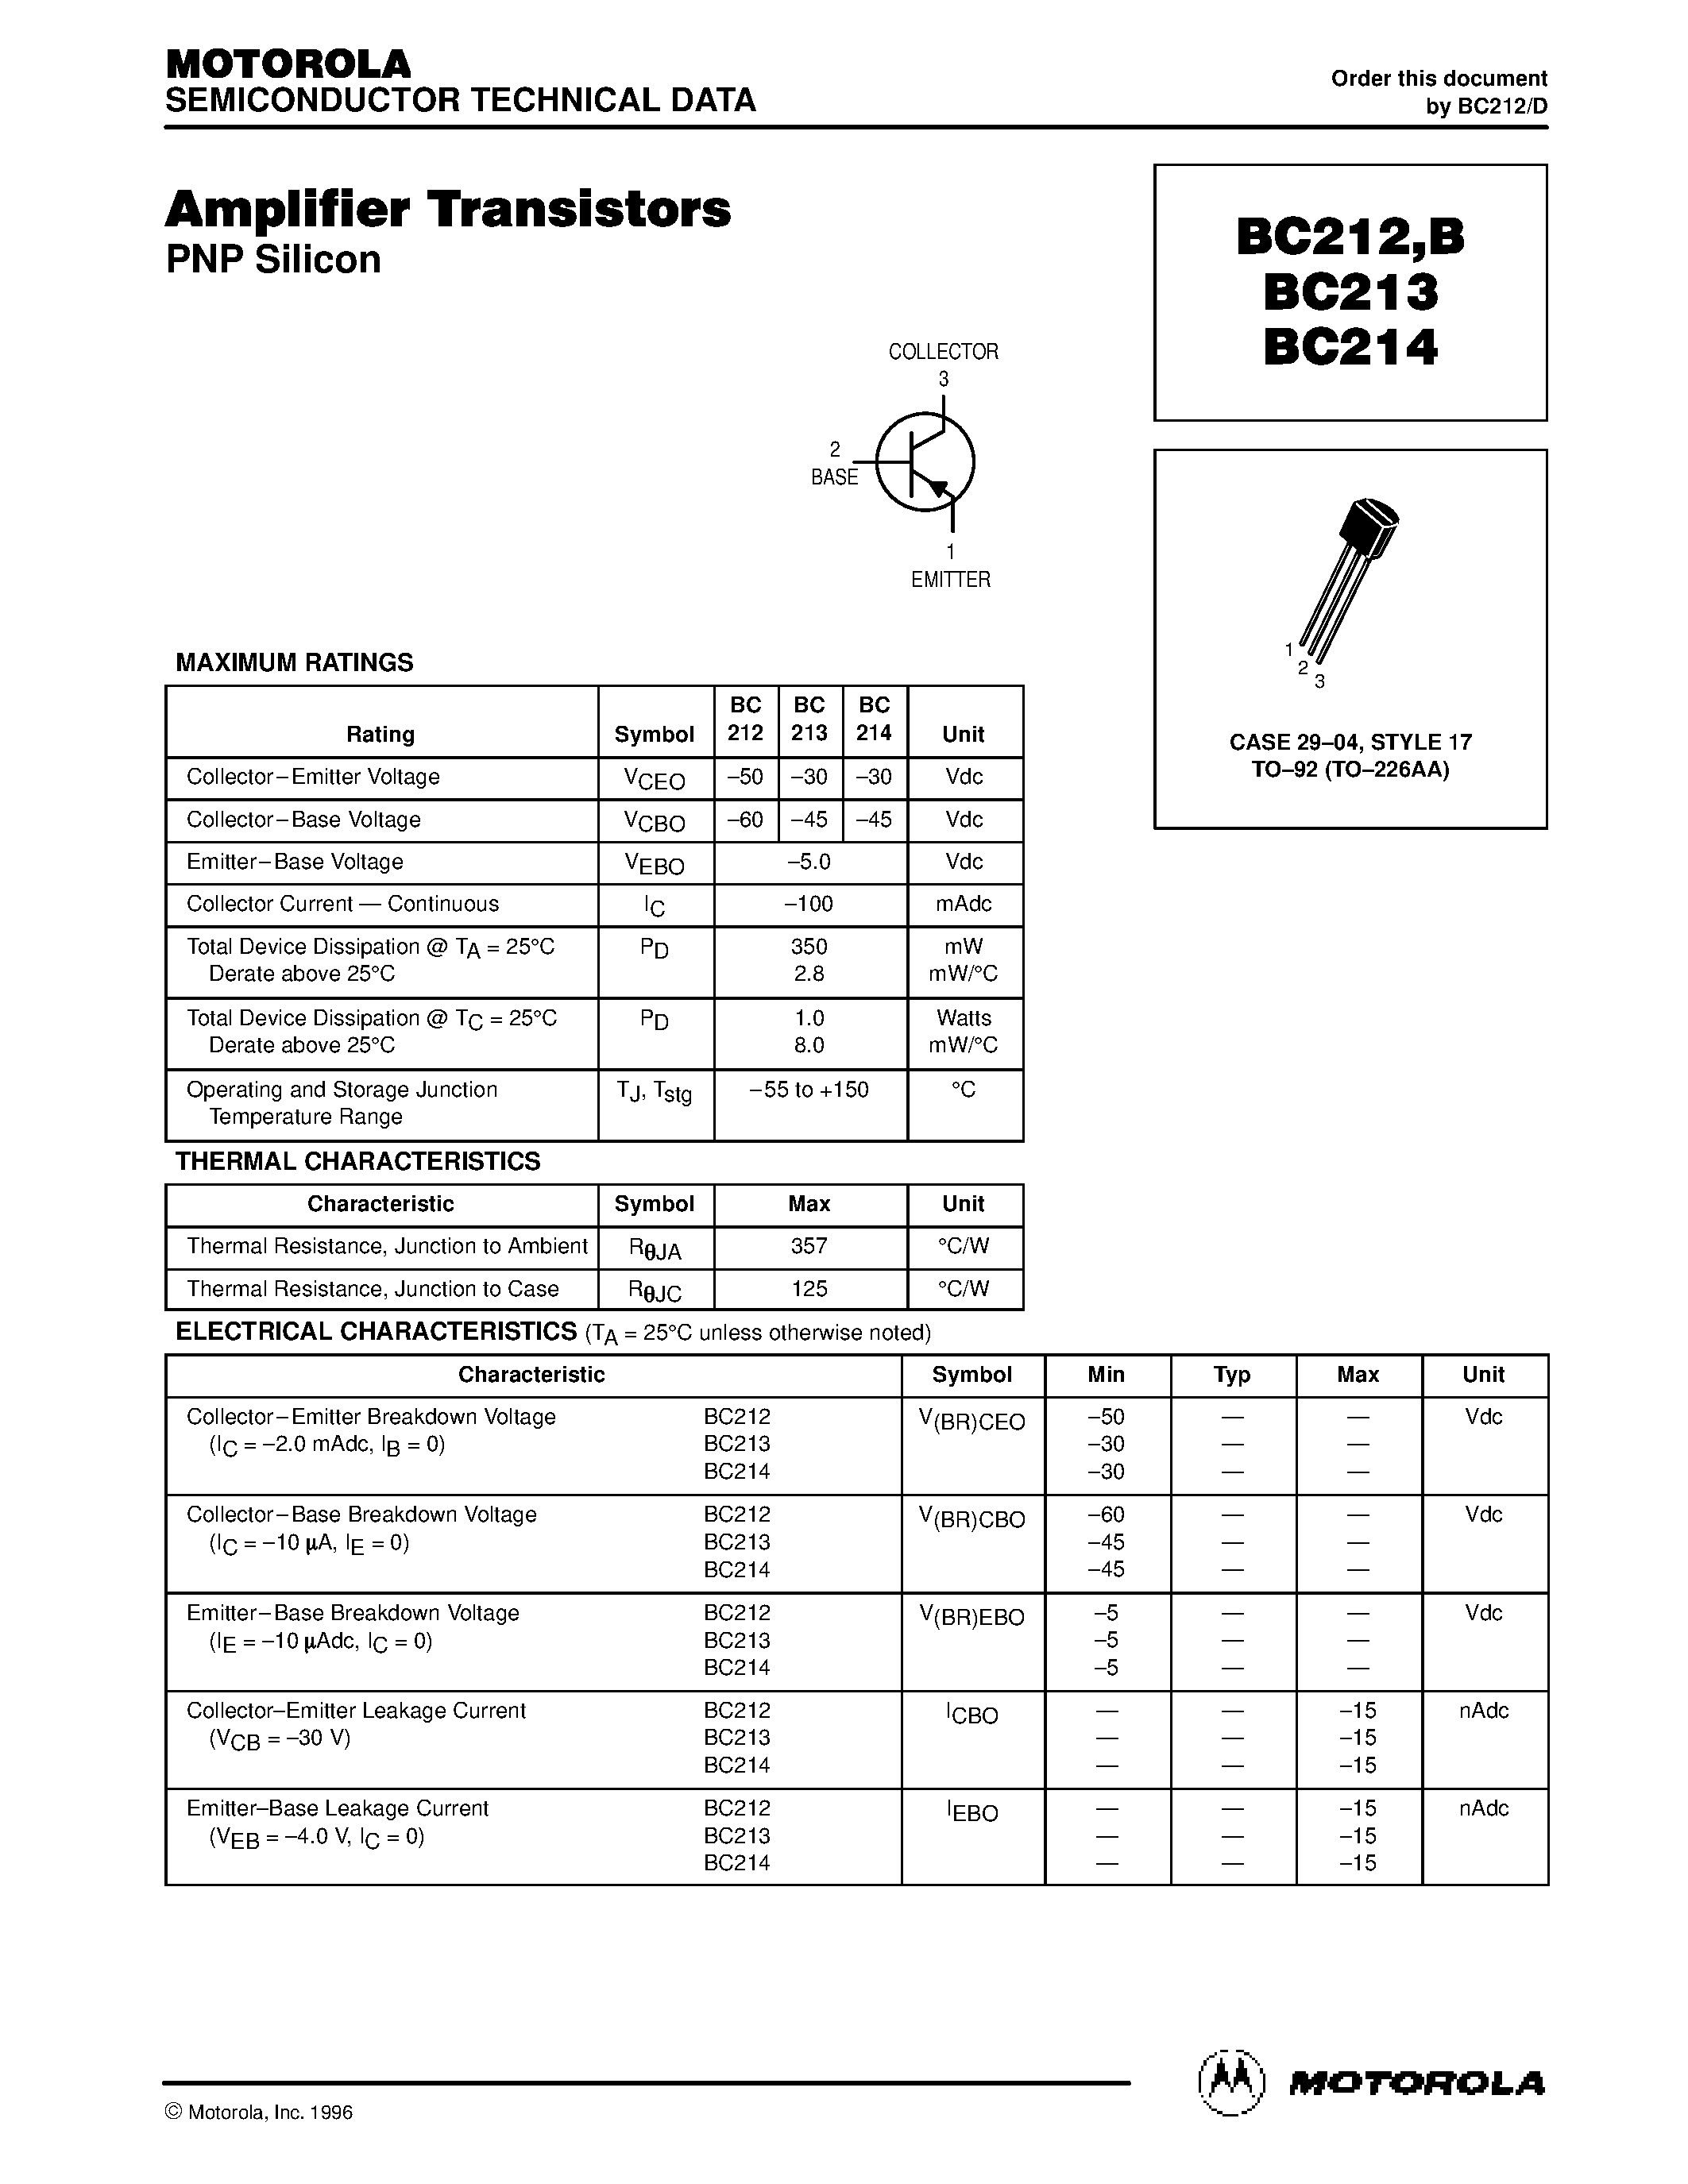 Datasheet BC214 - Amplifier Transistors(PNP Silicon) page 1